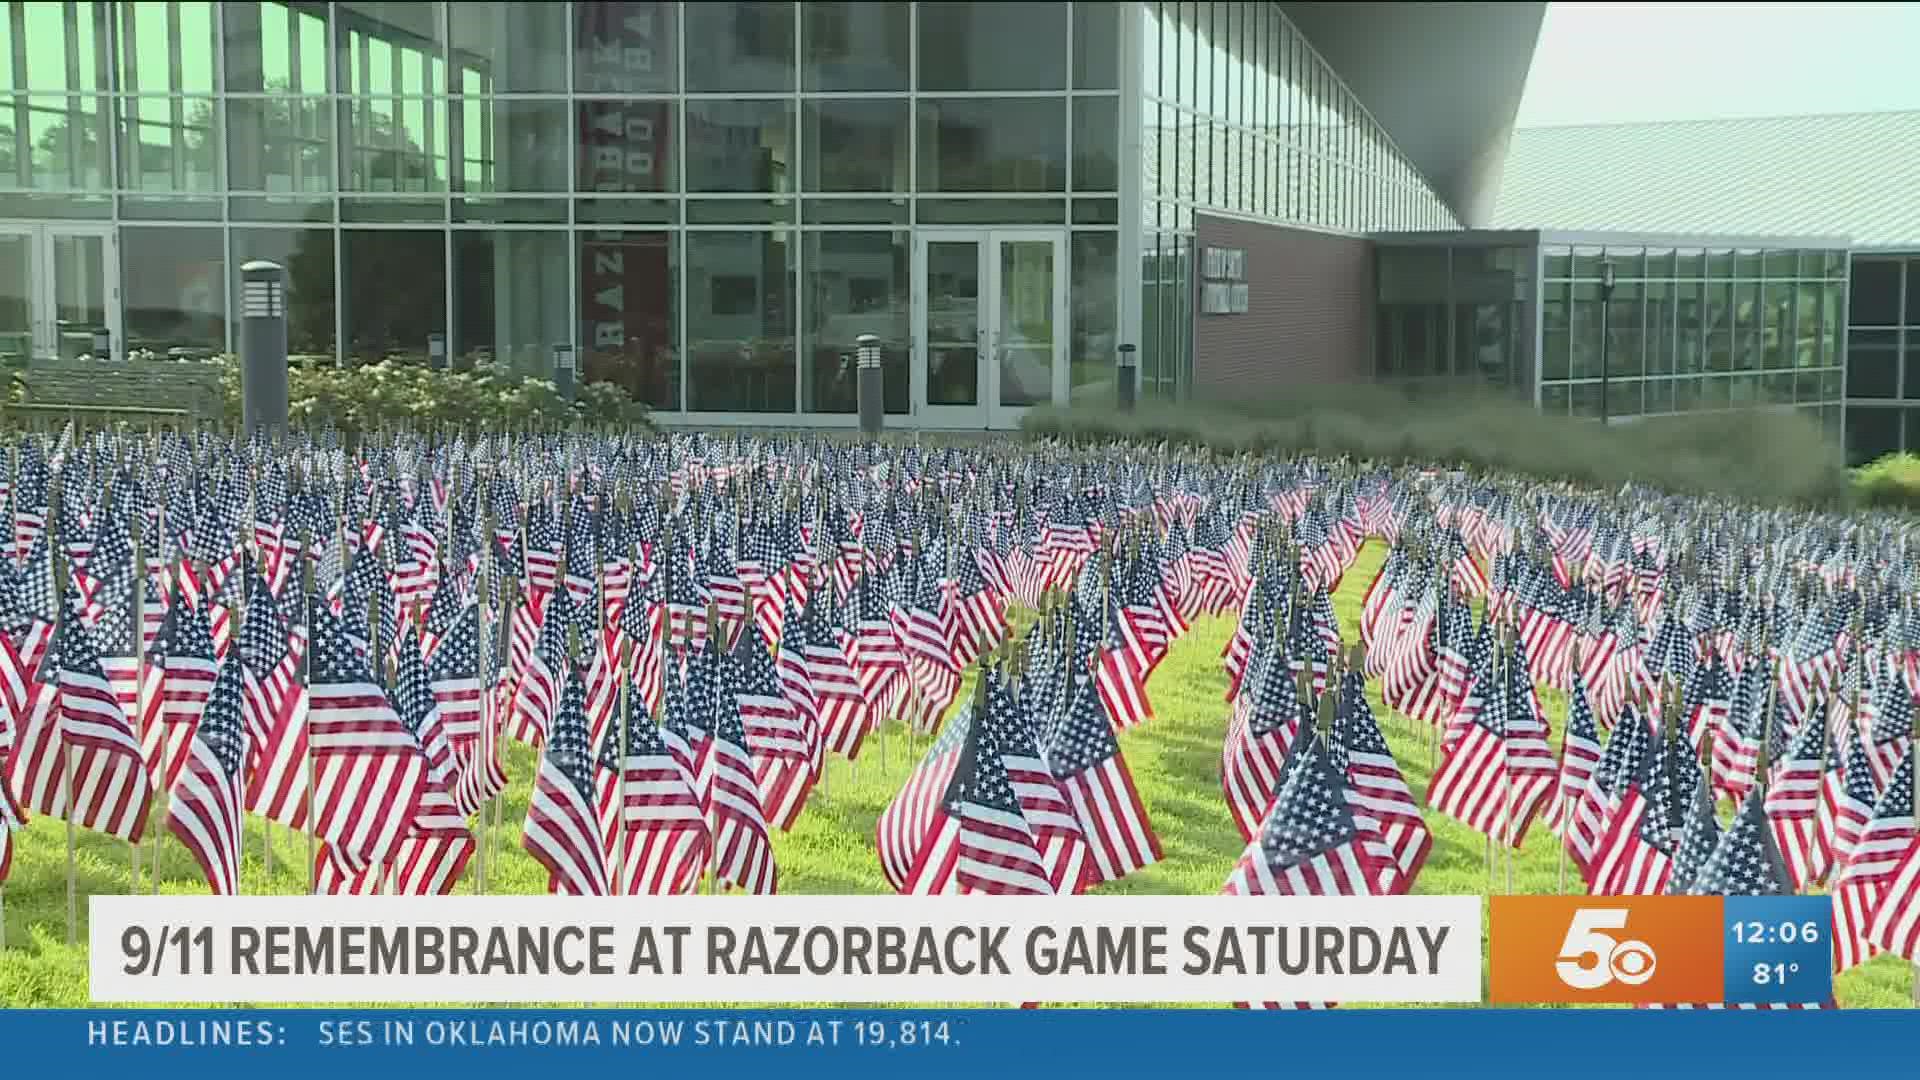 The Arkansas Razorbacks will honor the victims of 9/11 on the 20th anniversary of the terrorist attacks.